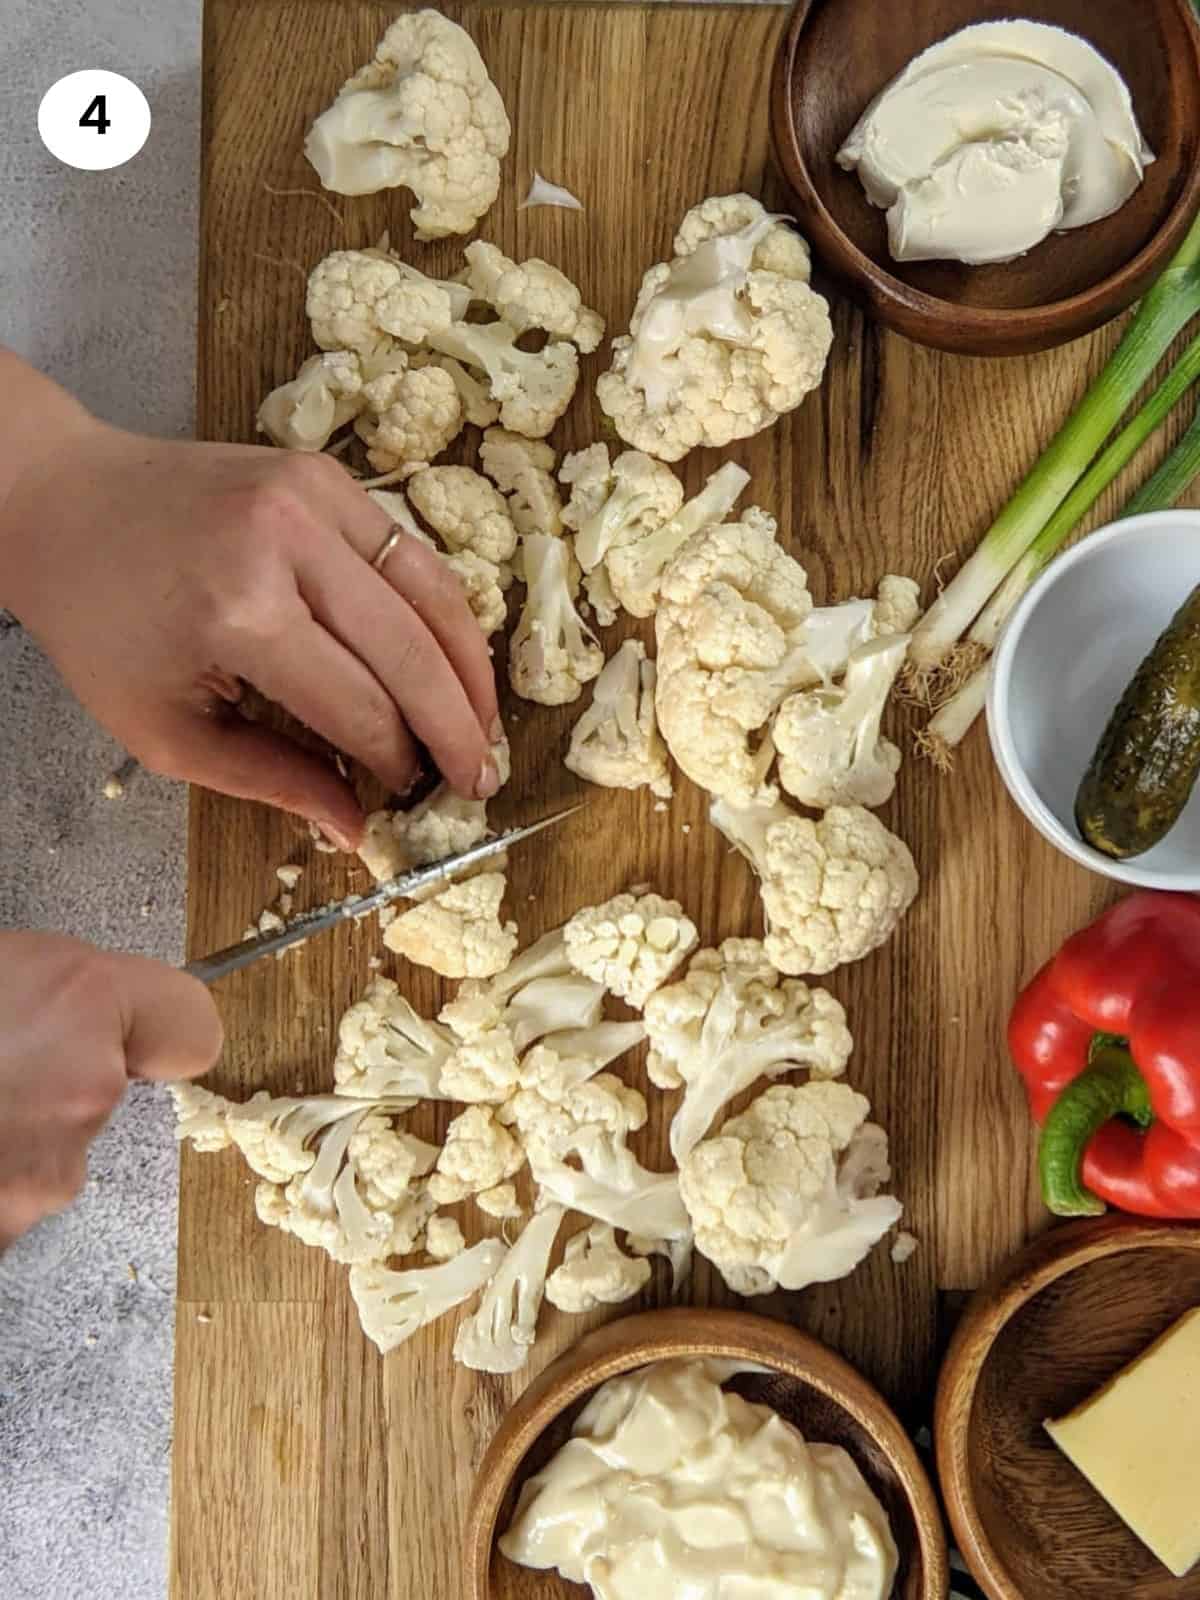 How to cut cauliflower into bite sized pieces